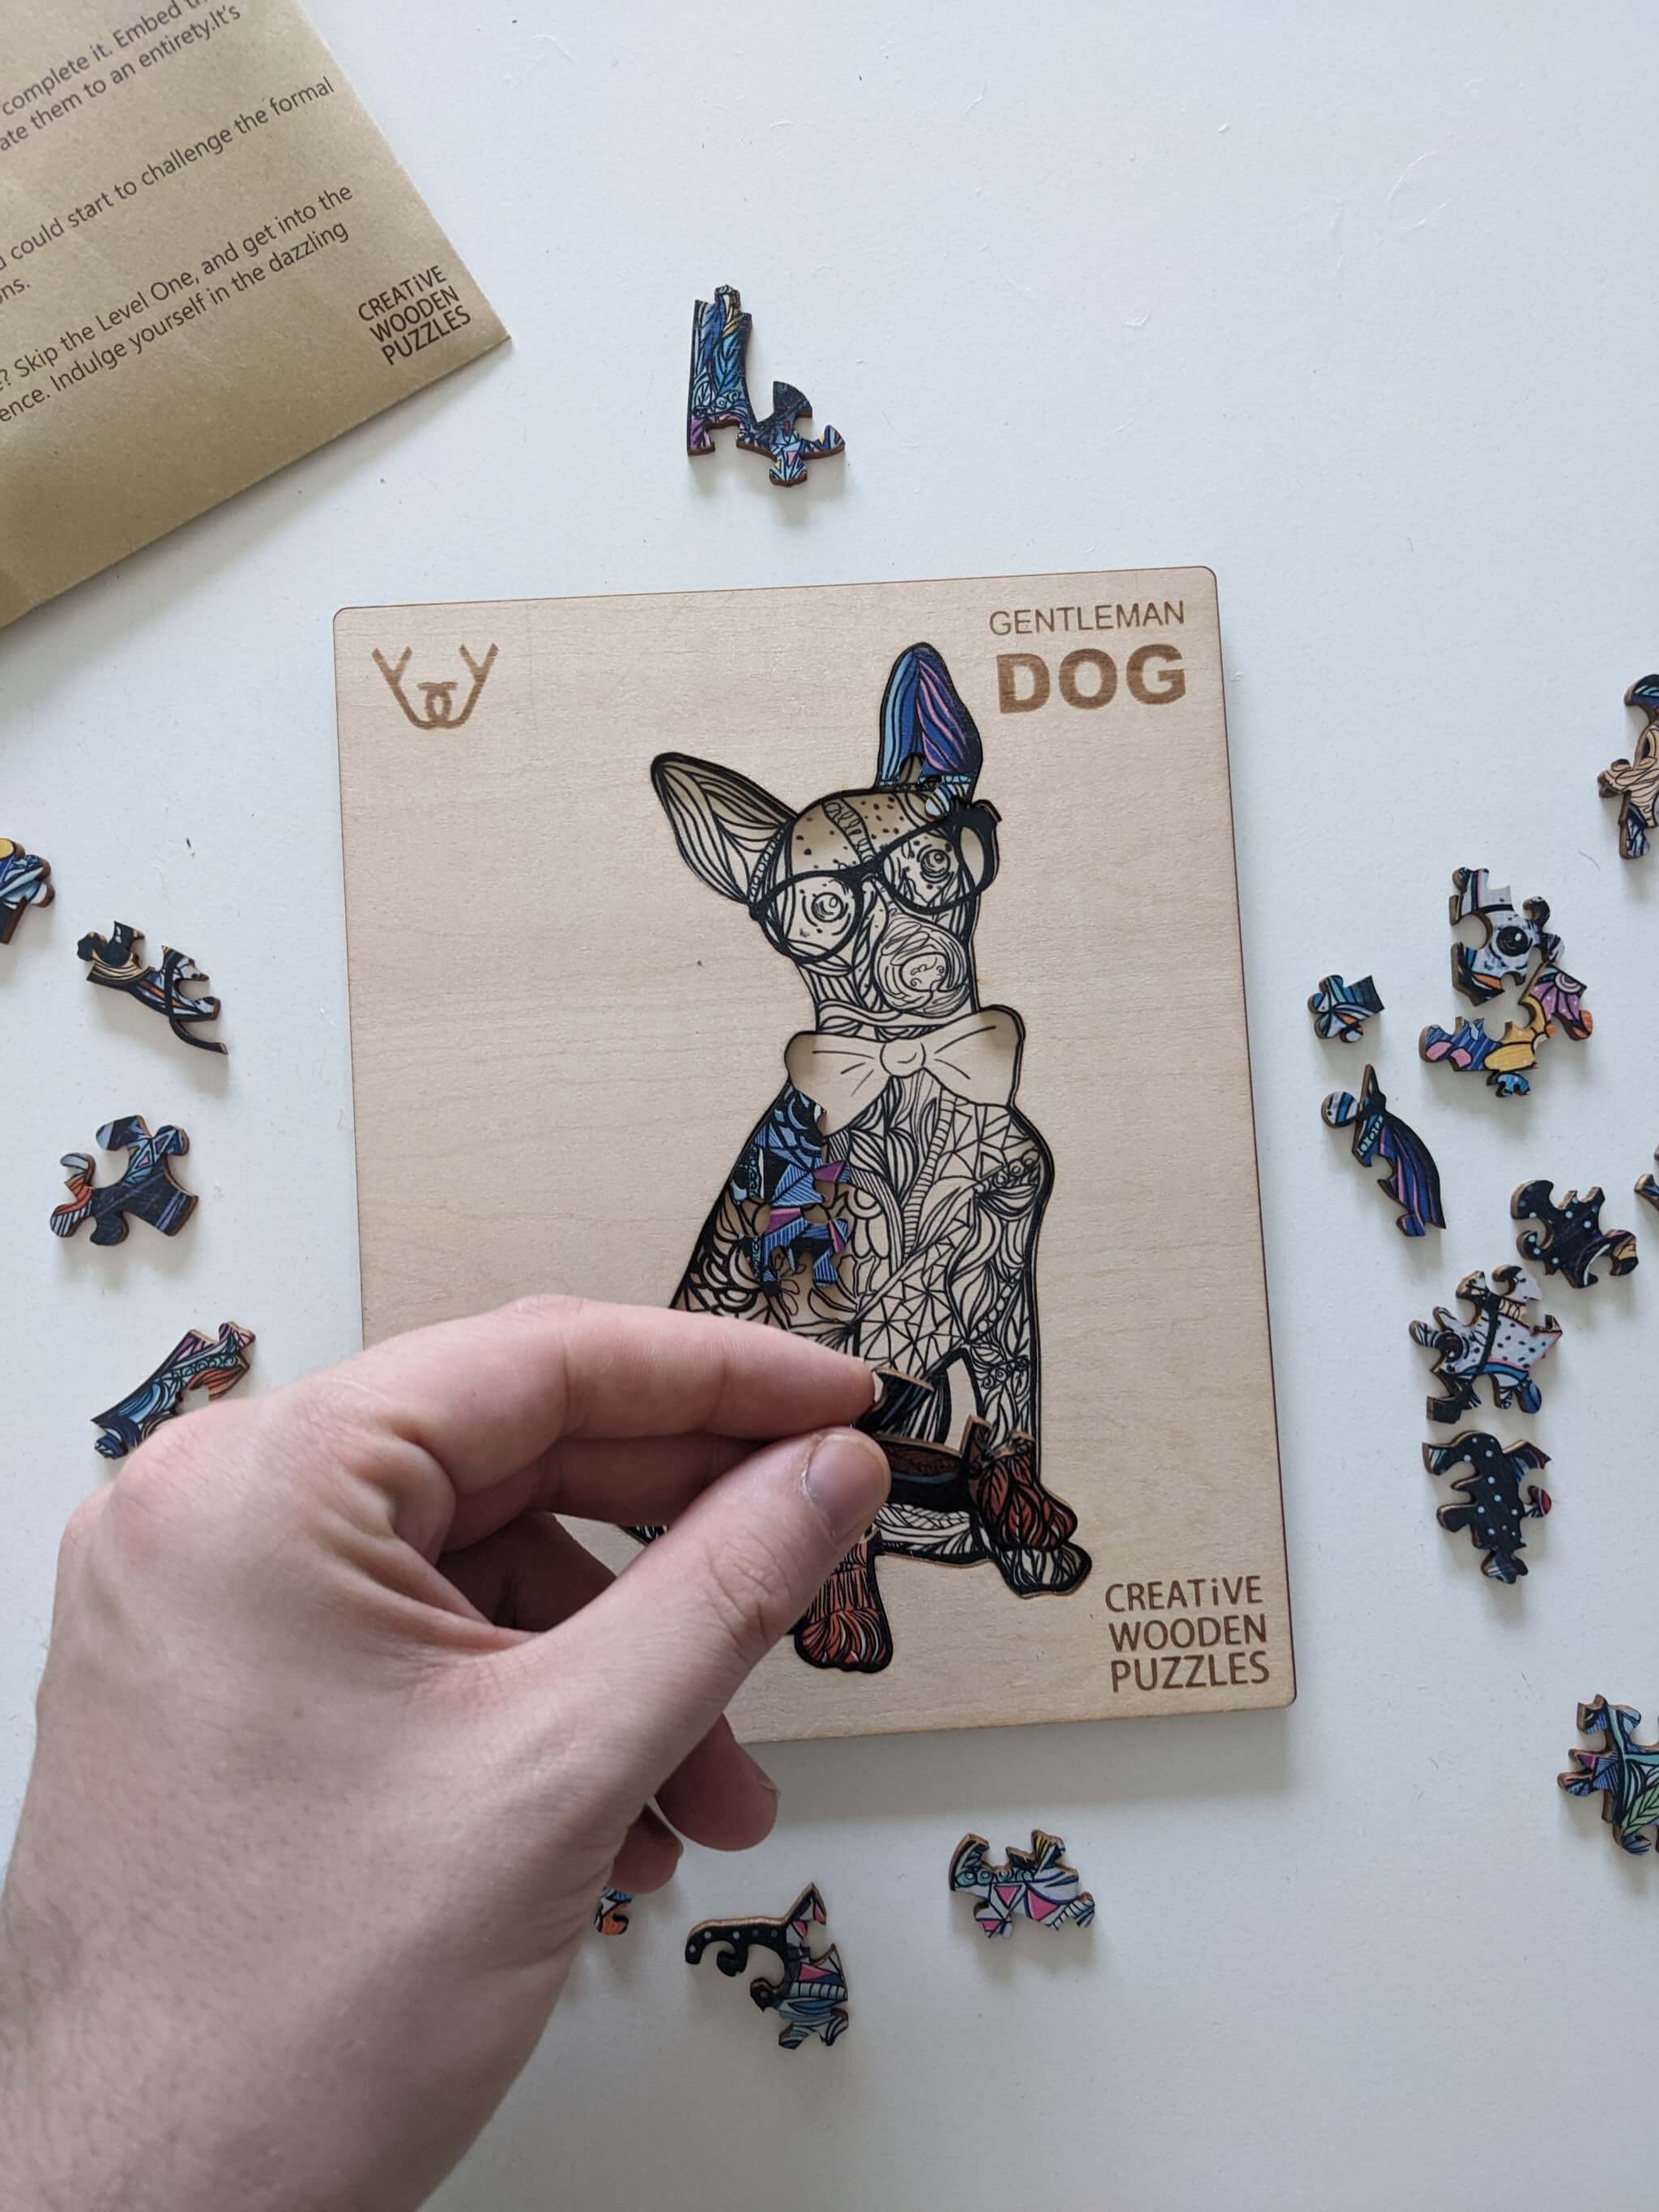 Dřevěné puzzle – Gentleman Dog (pes)